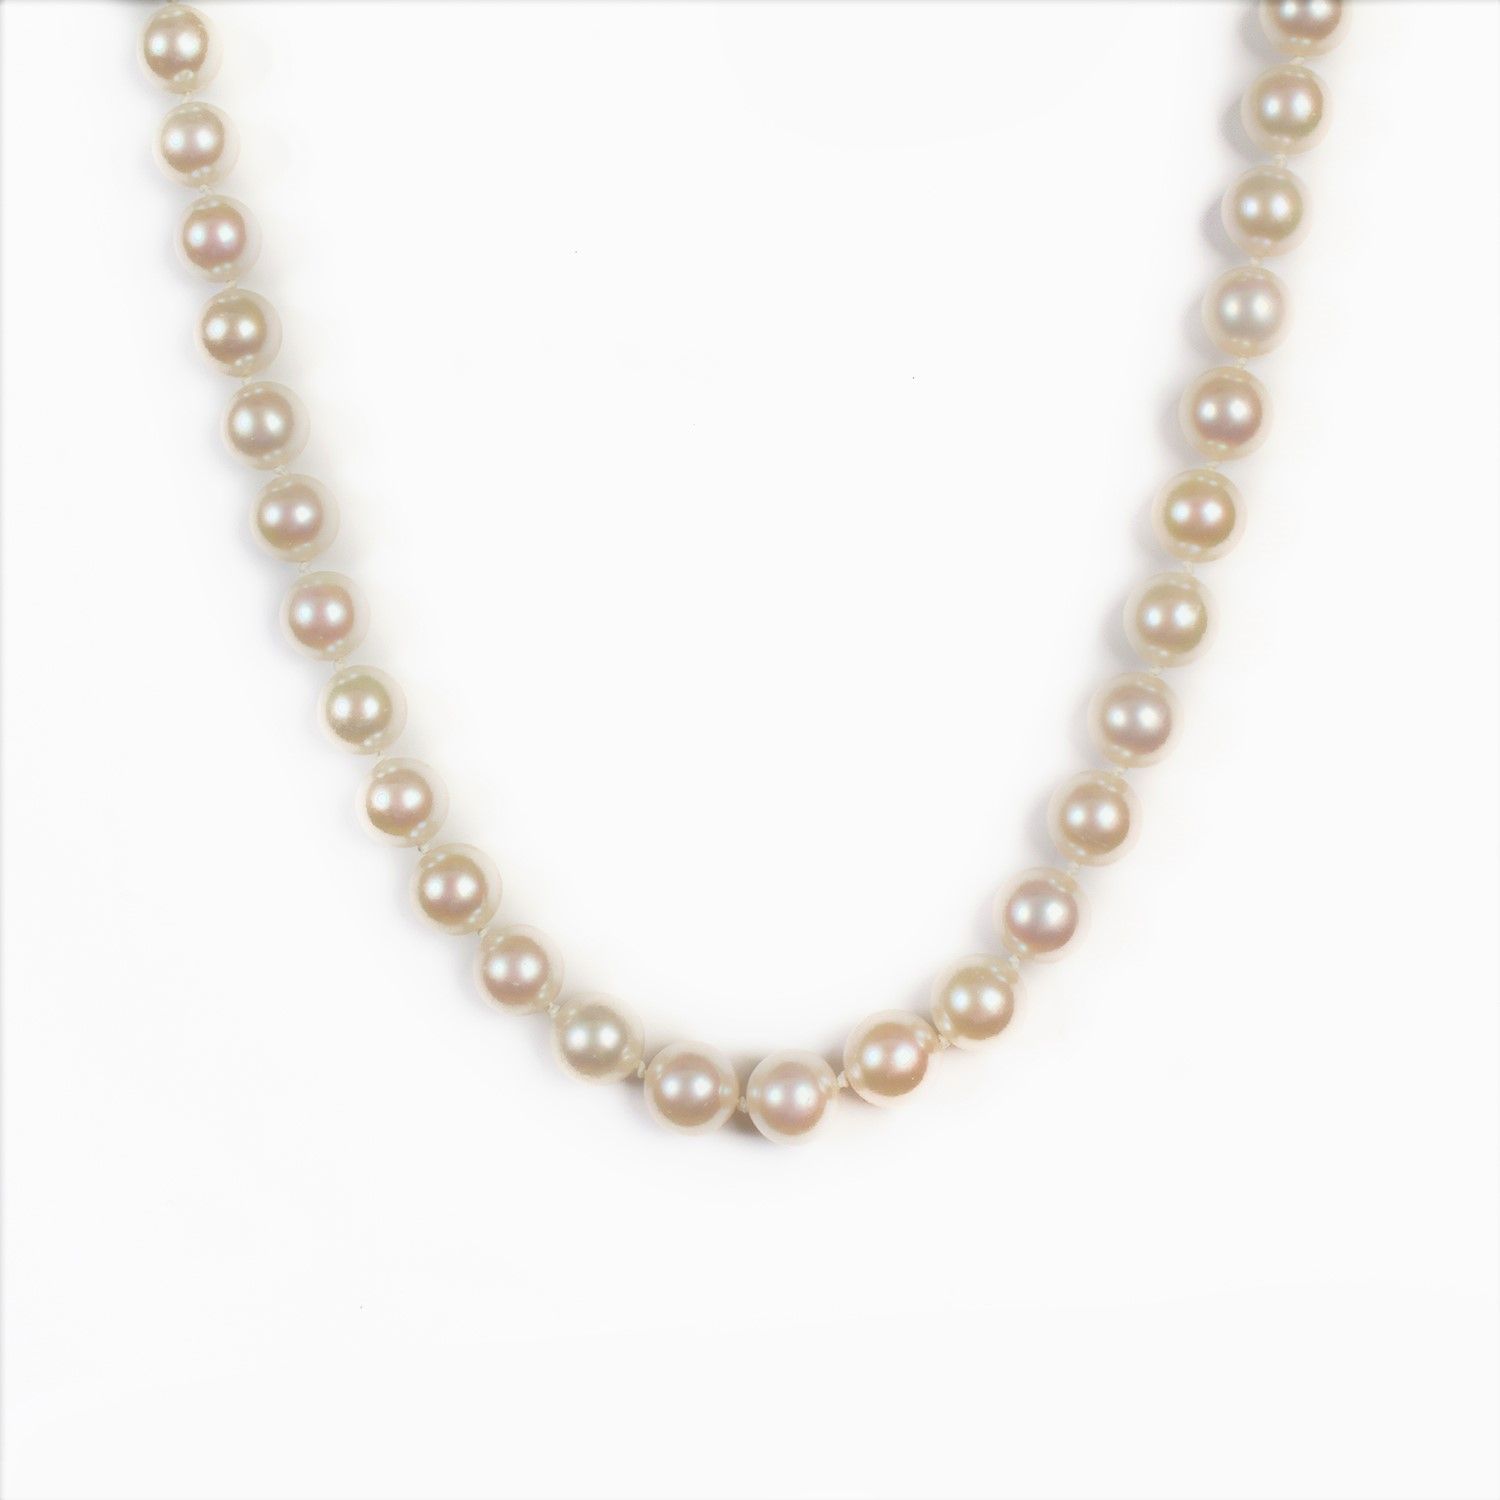 Collar de perlas de agua dulce 淡水珍珠项圈，配以18K金海洋石。 

长64厘米。珍珠直径8,5-9毫米